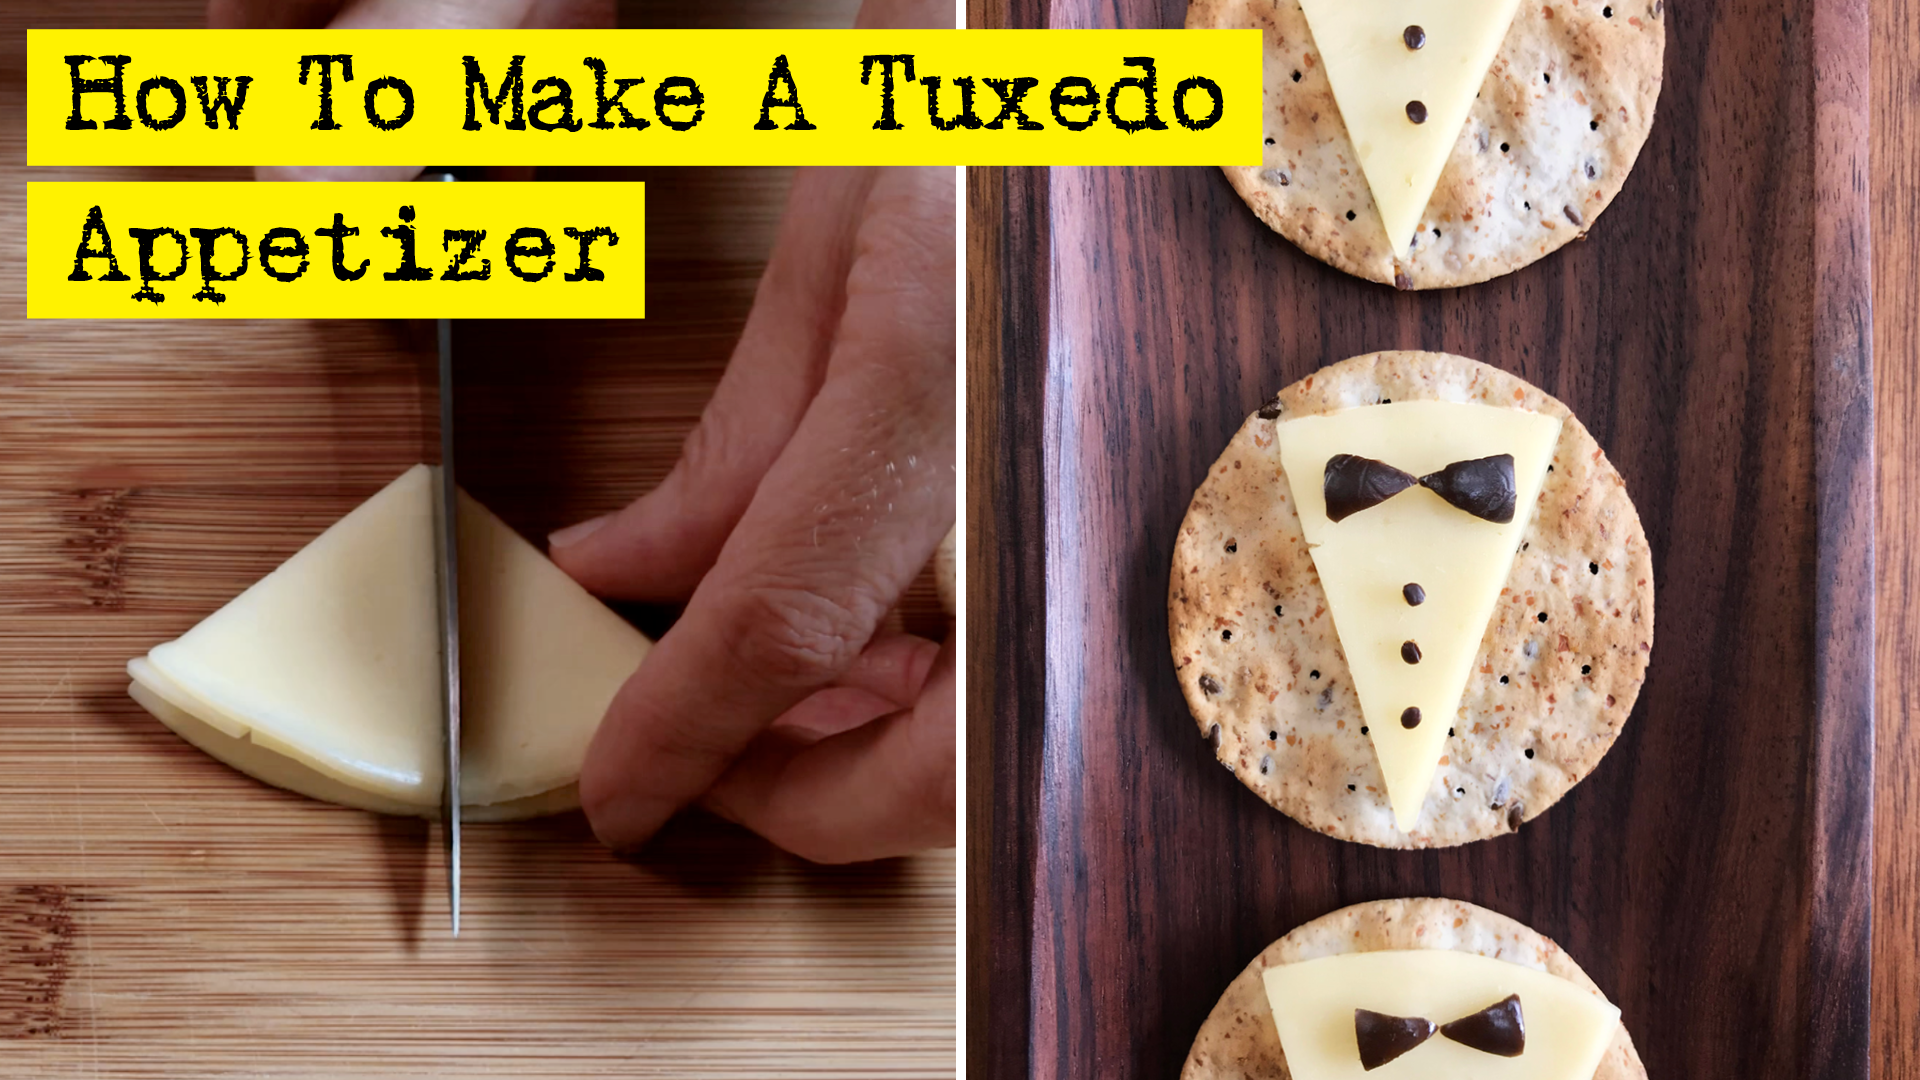 How To Make A Tuxedo Appetizer by DIY Presto!